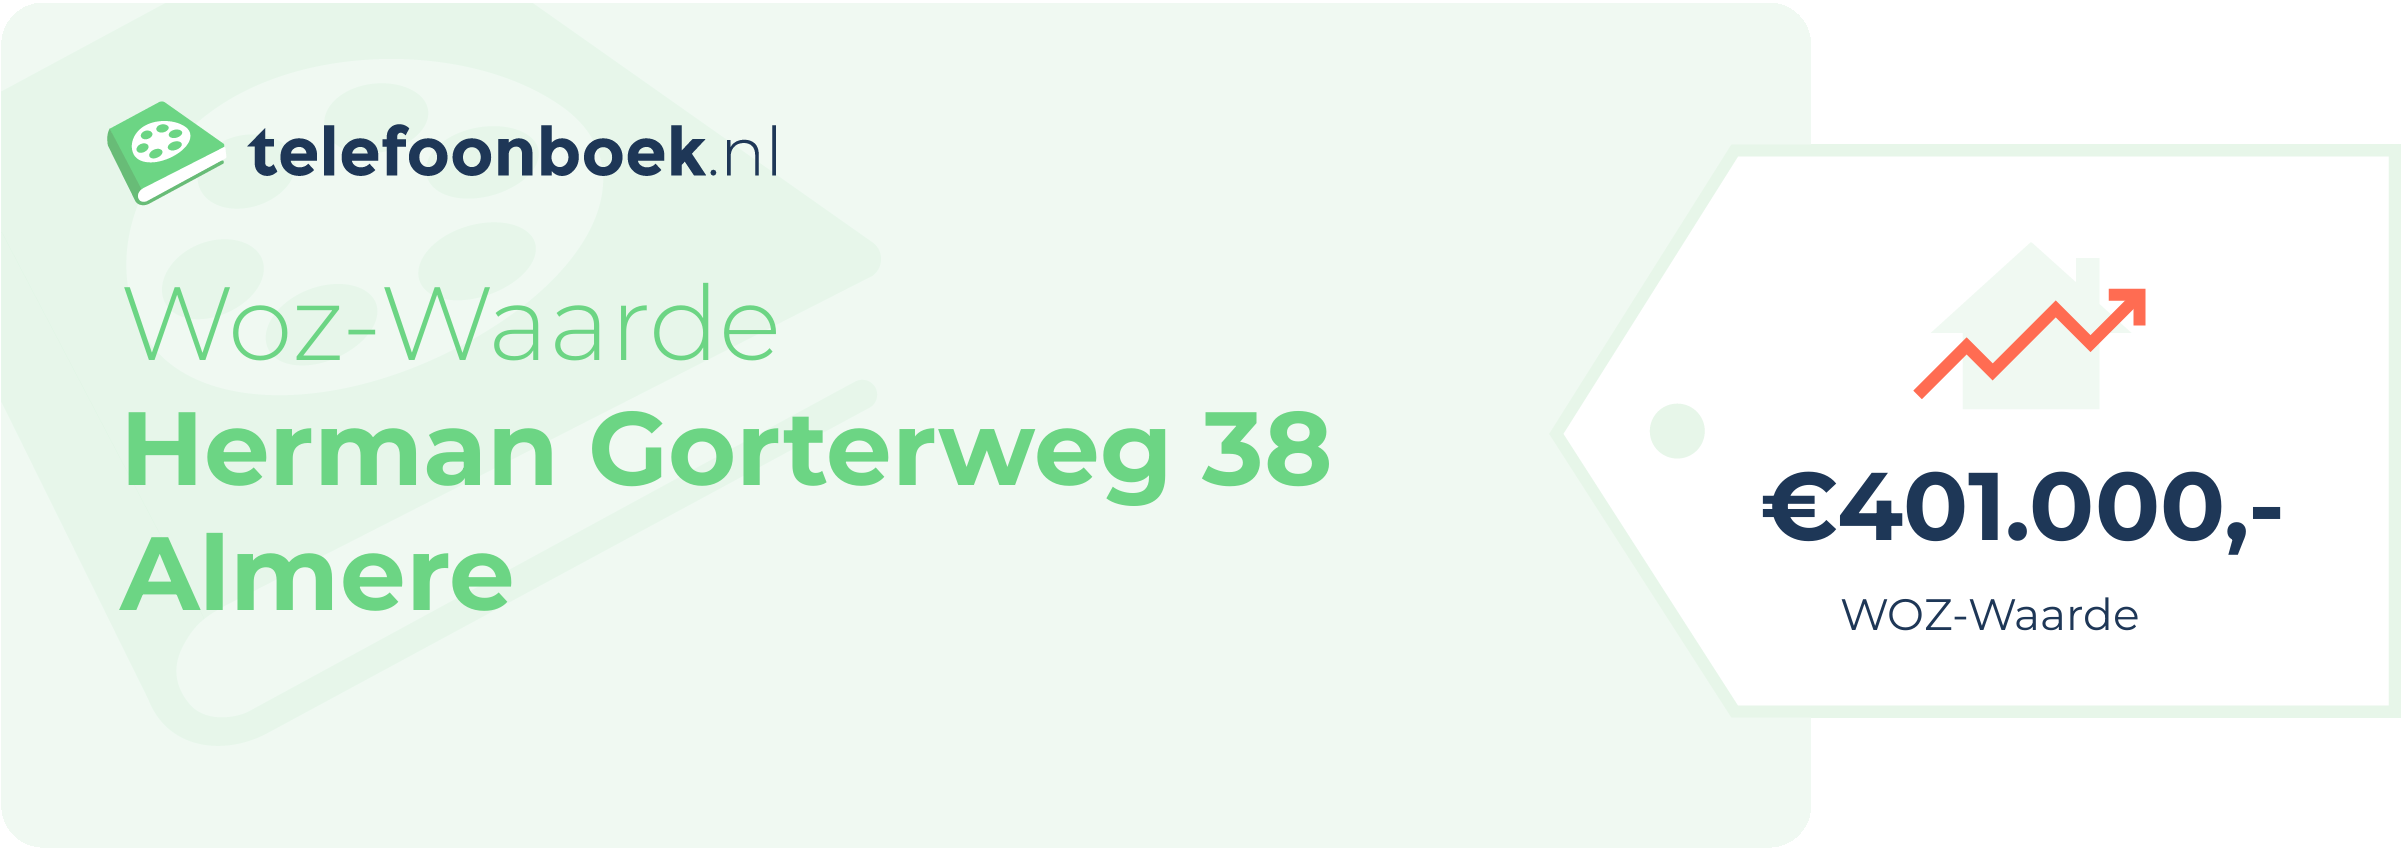 WOZ-waarde Herman Gorterweg 38 Almere